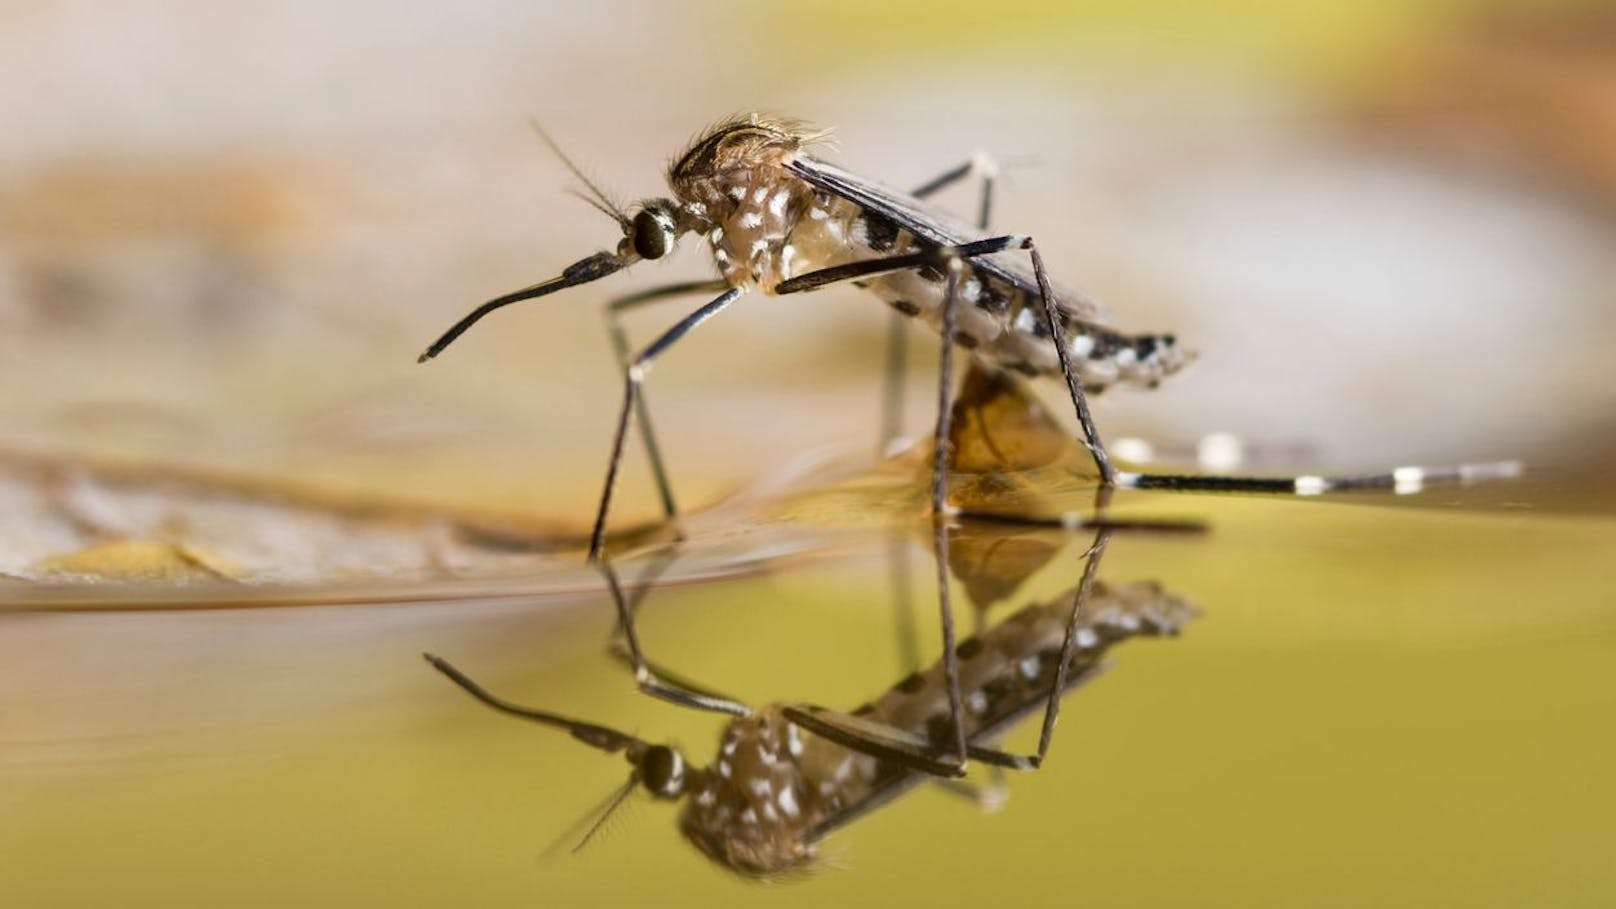 Kampf gegen Malaria! So will man Moskitos eindämmen